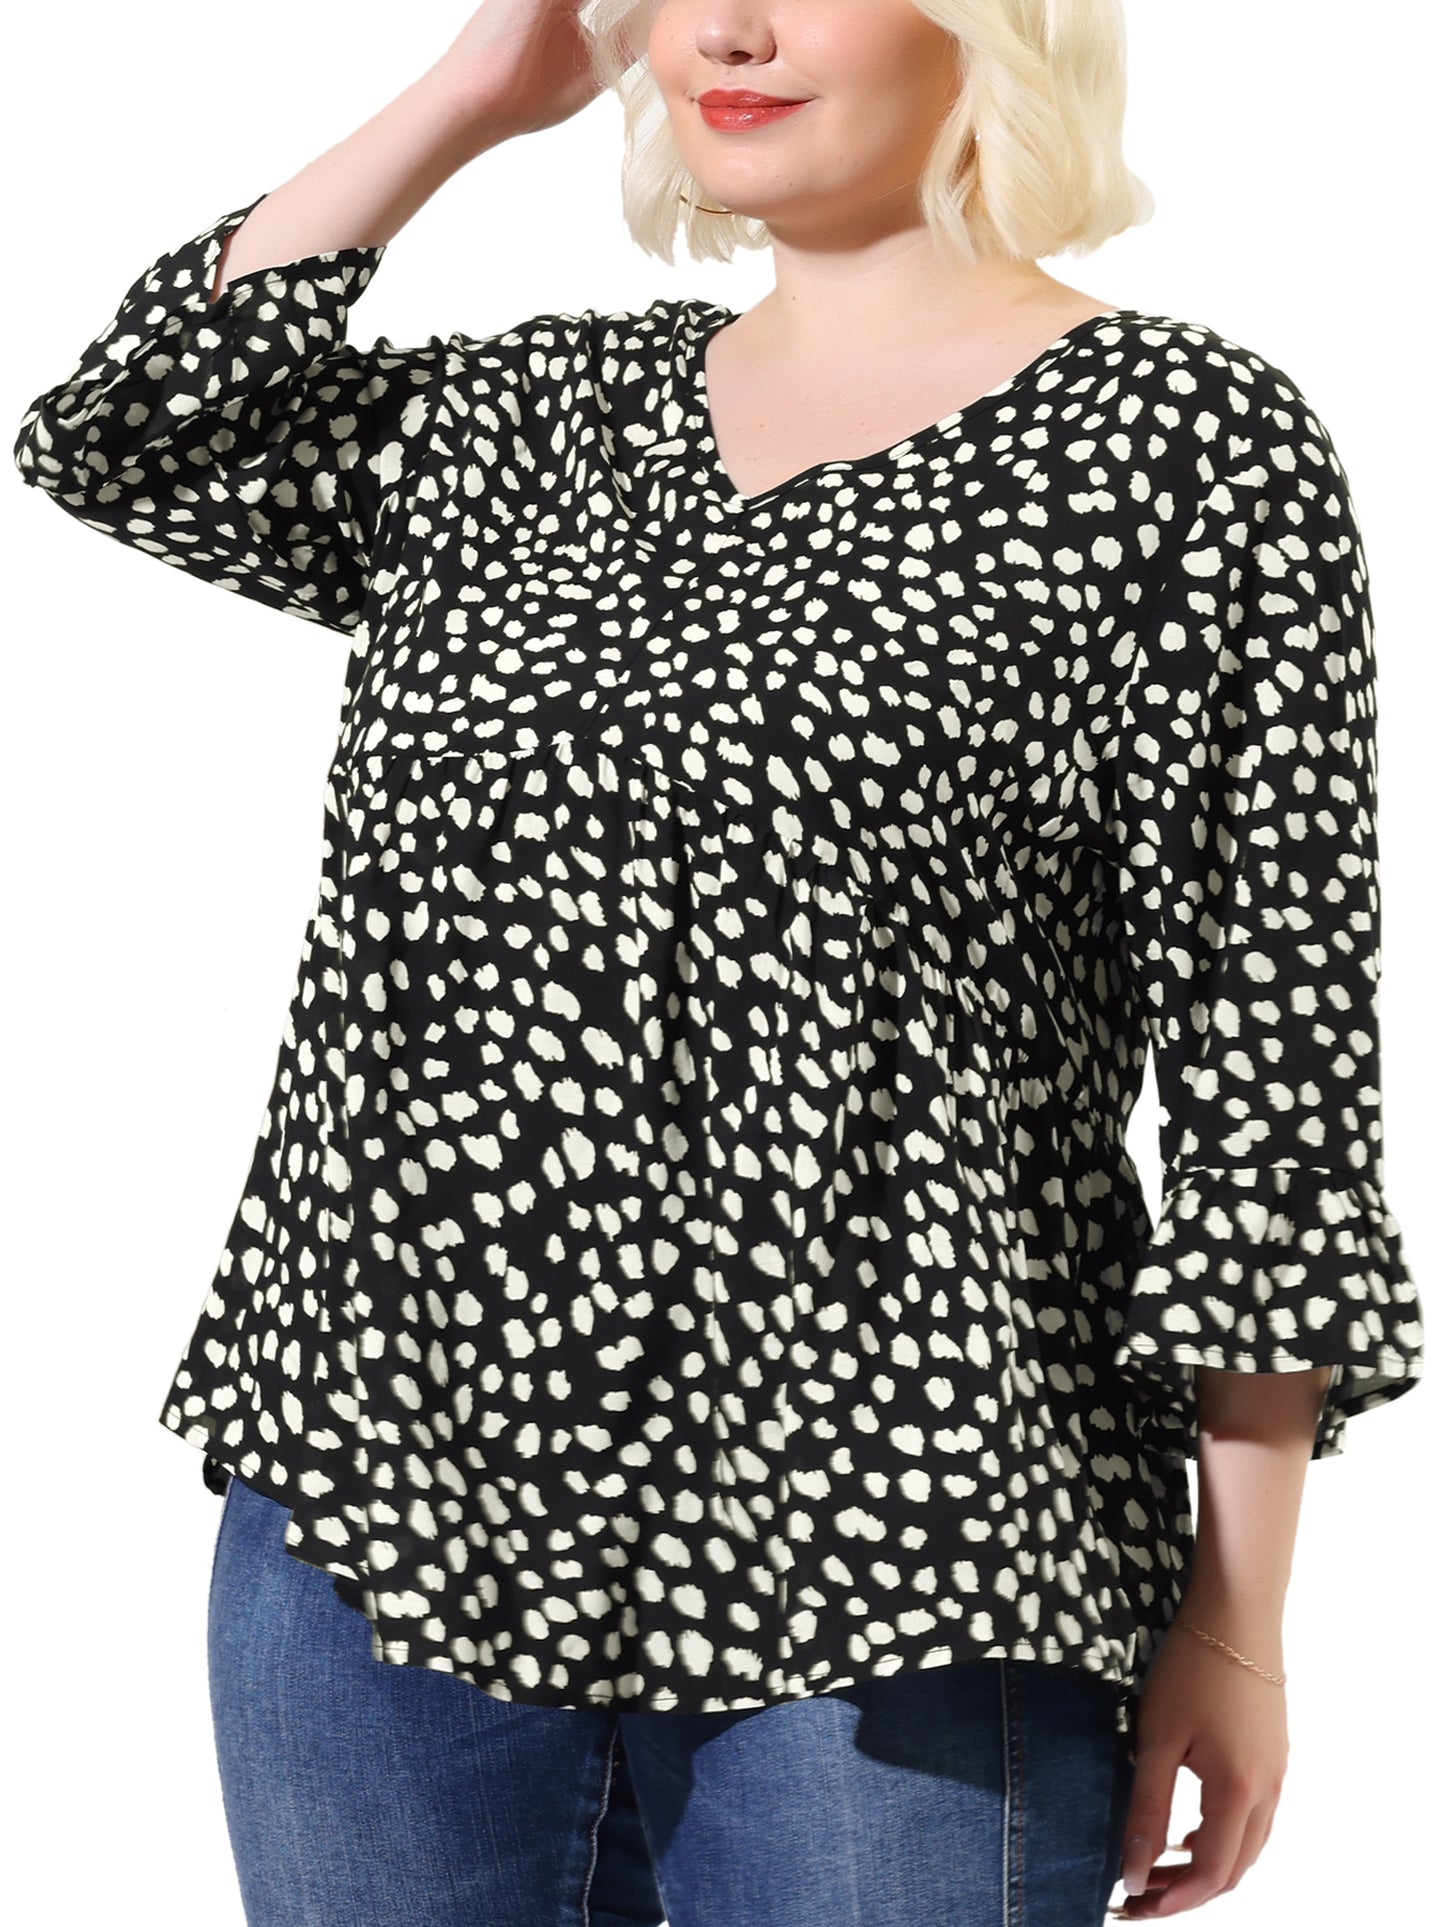 Agnes Orinda Plus Size Polka Dots Blouses V Neck 3/4 Ruffle Sleeve Peplum Tops Black